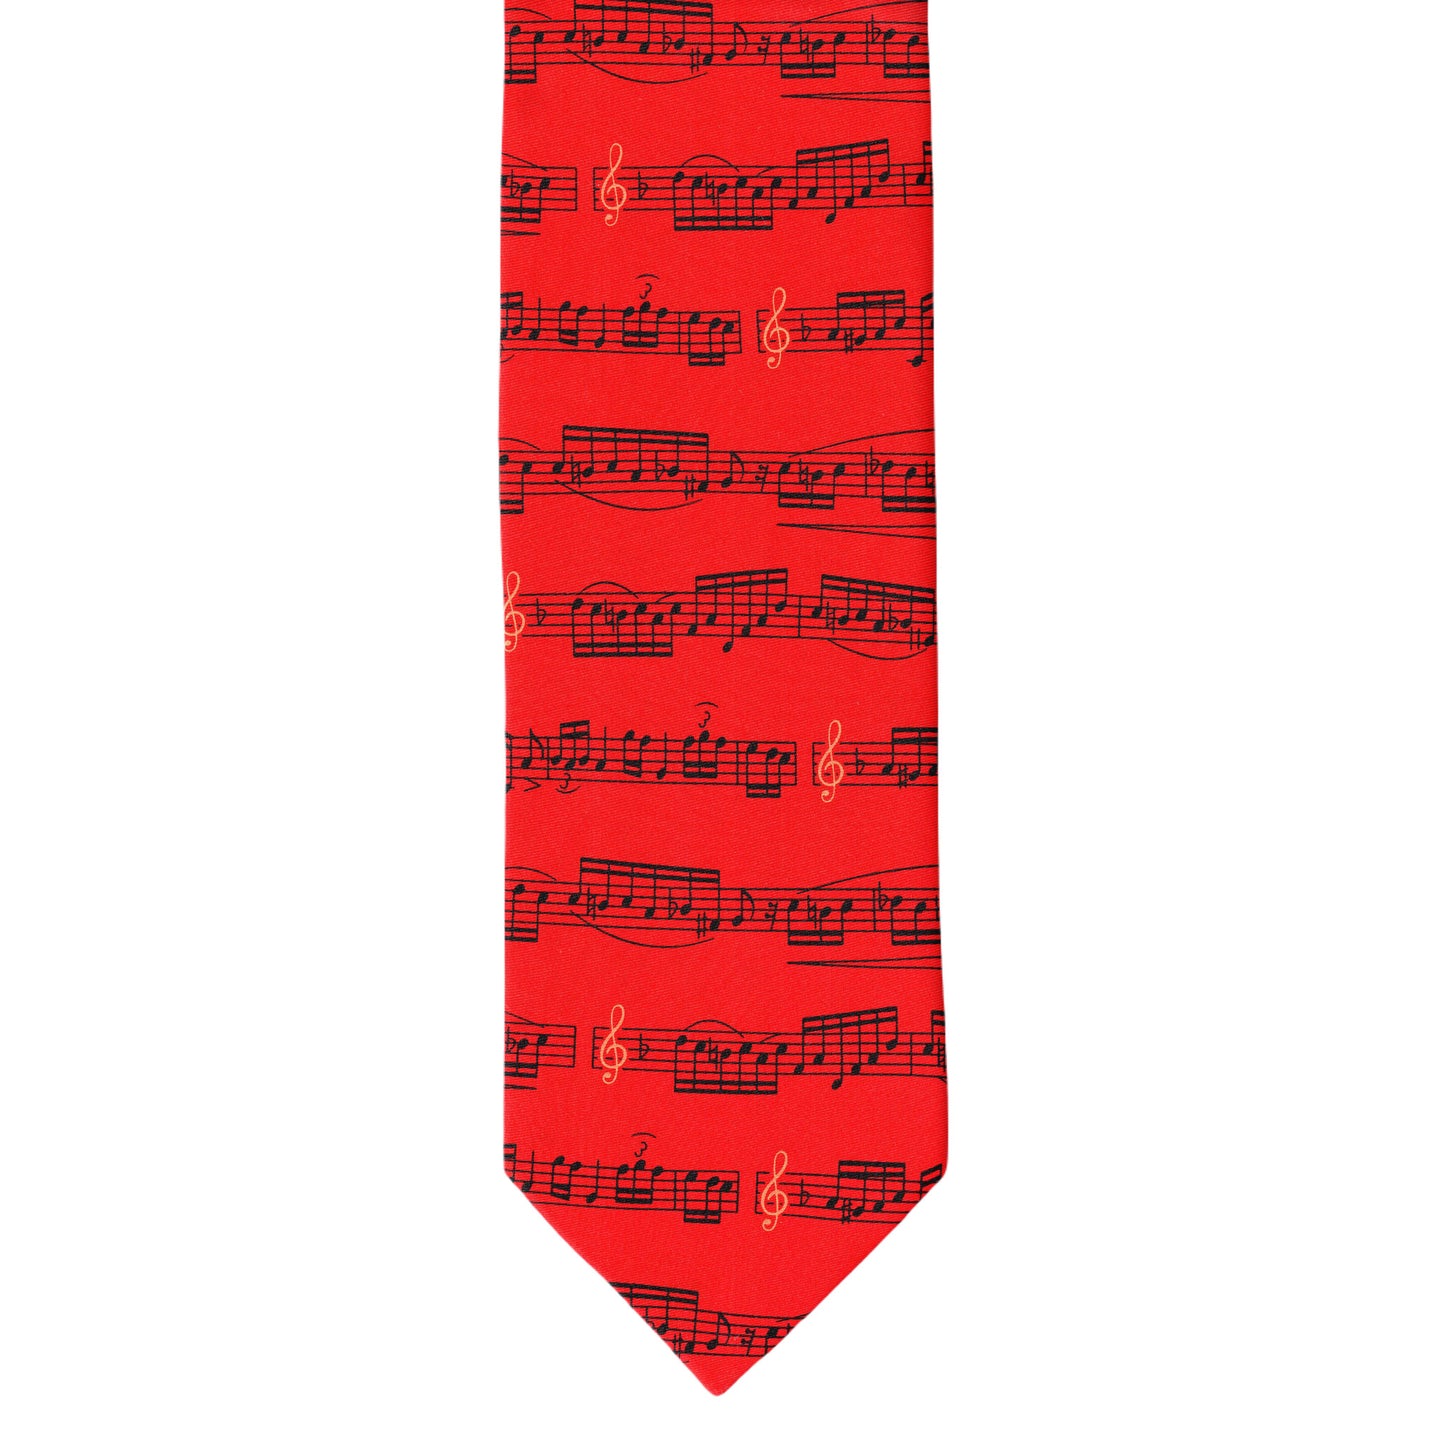 Sheet Music Tie, Red